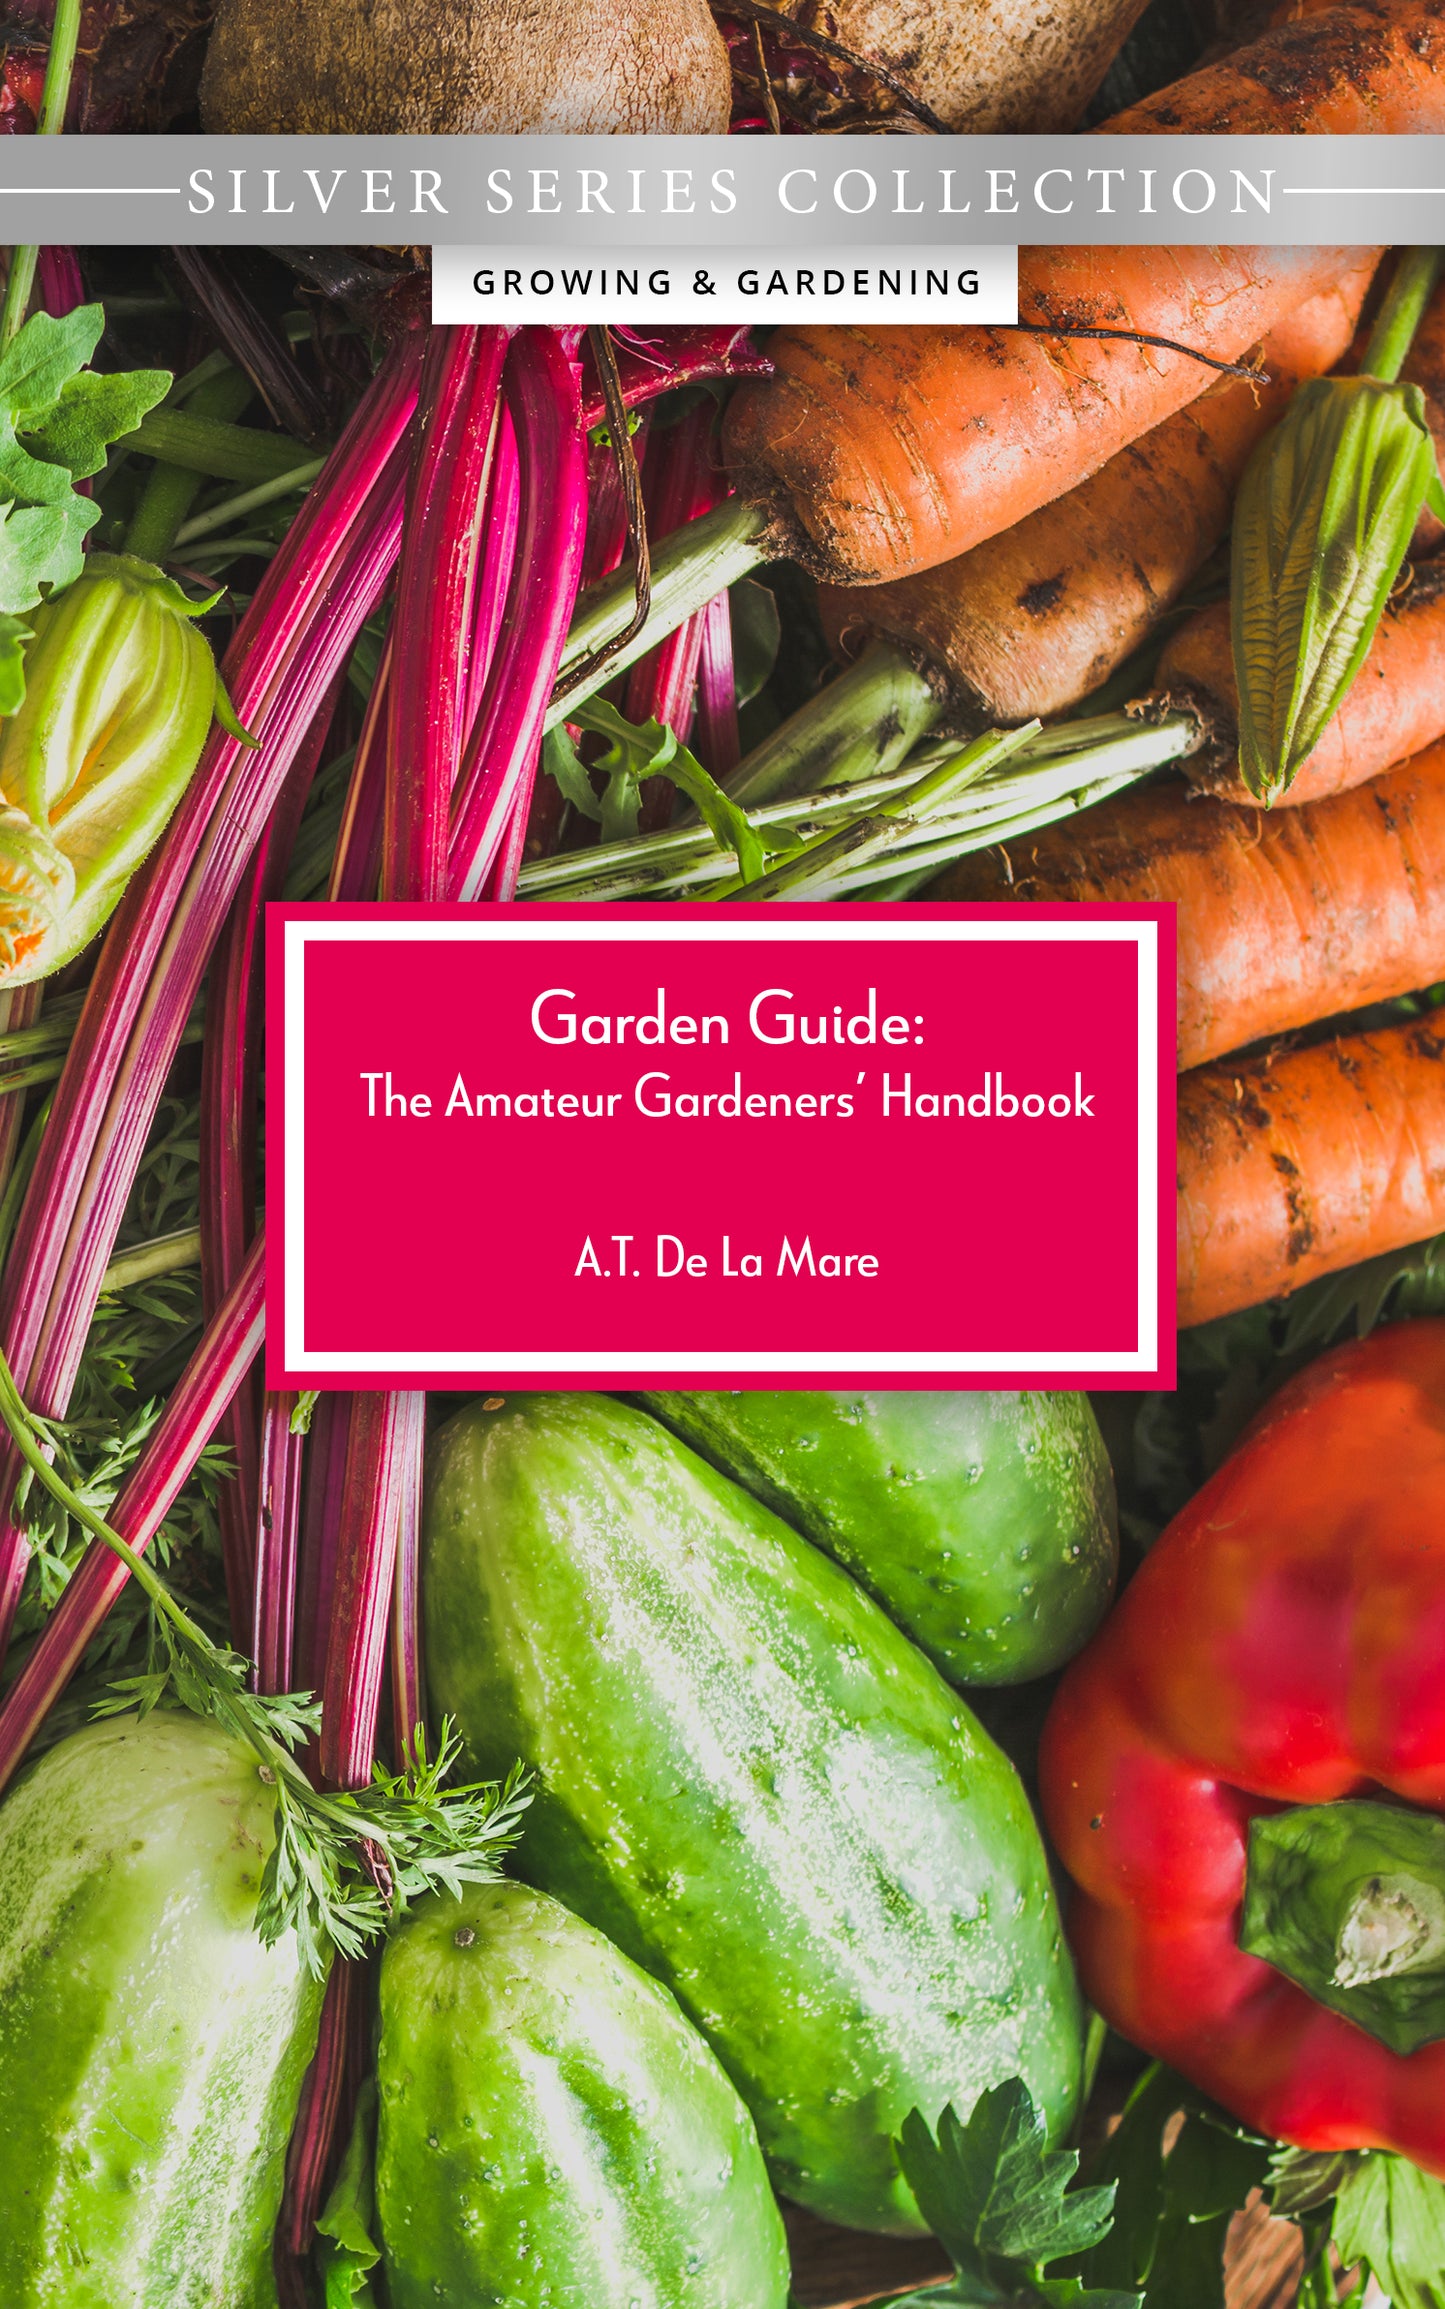 Garden Guide: The Amateur Gardeners' Handbook